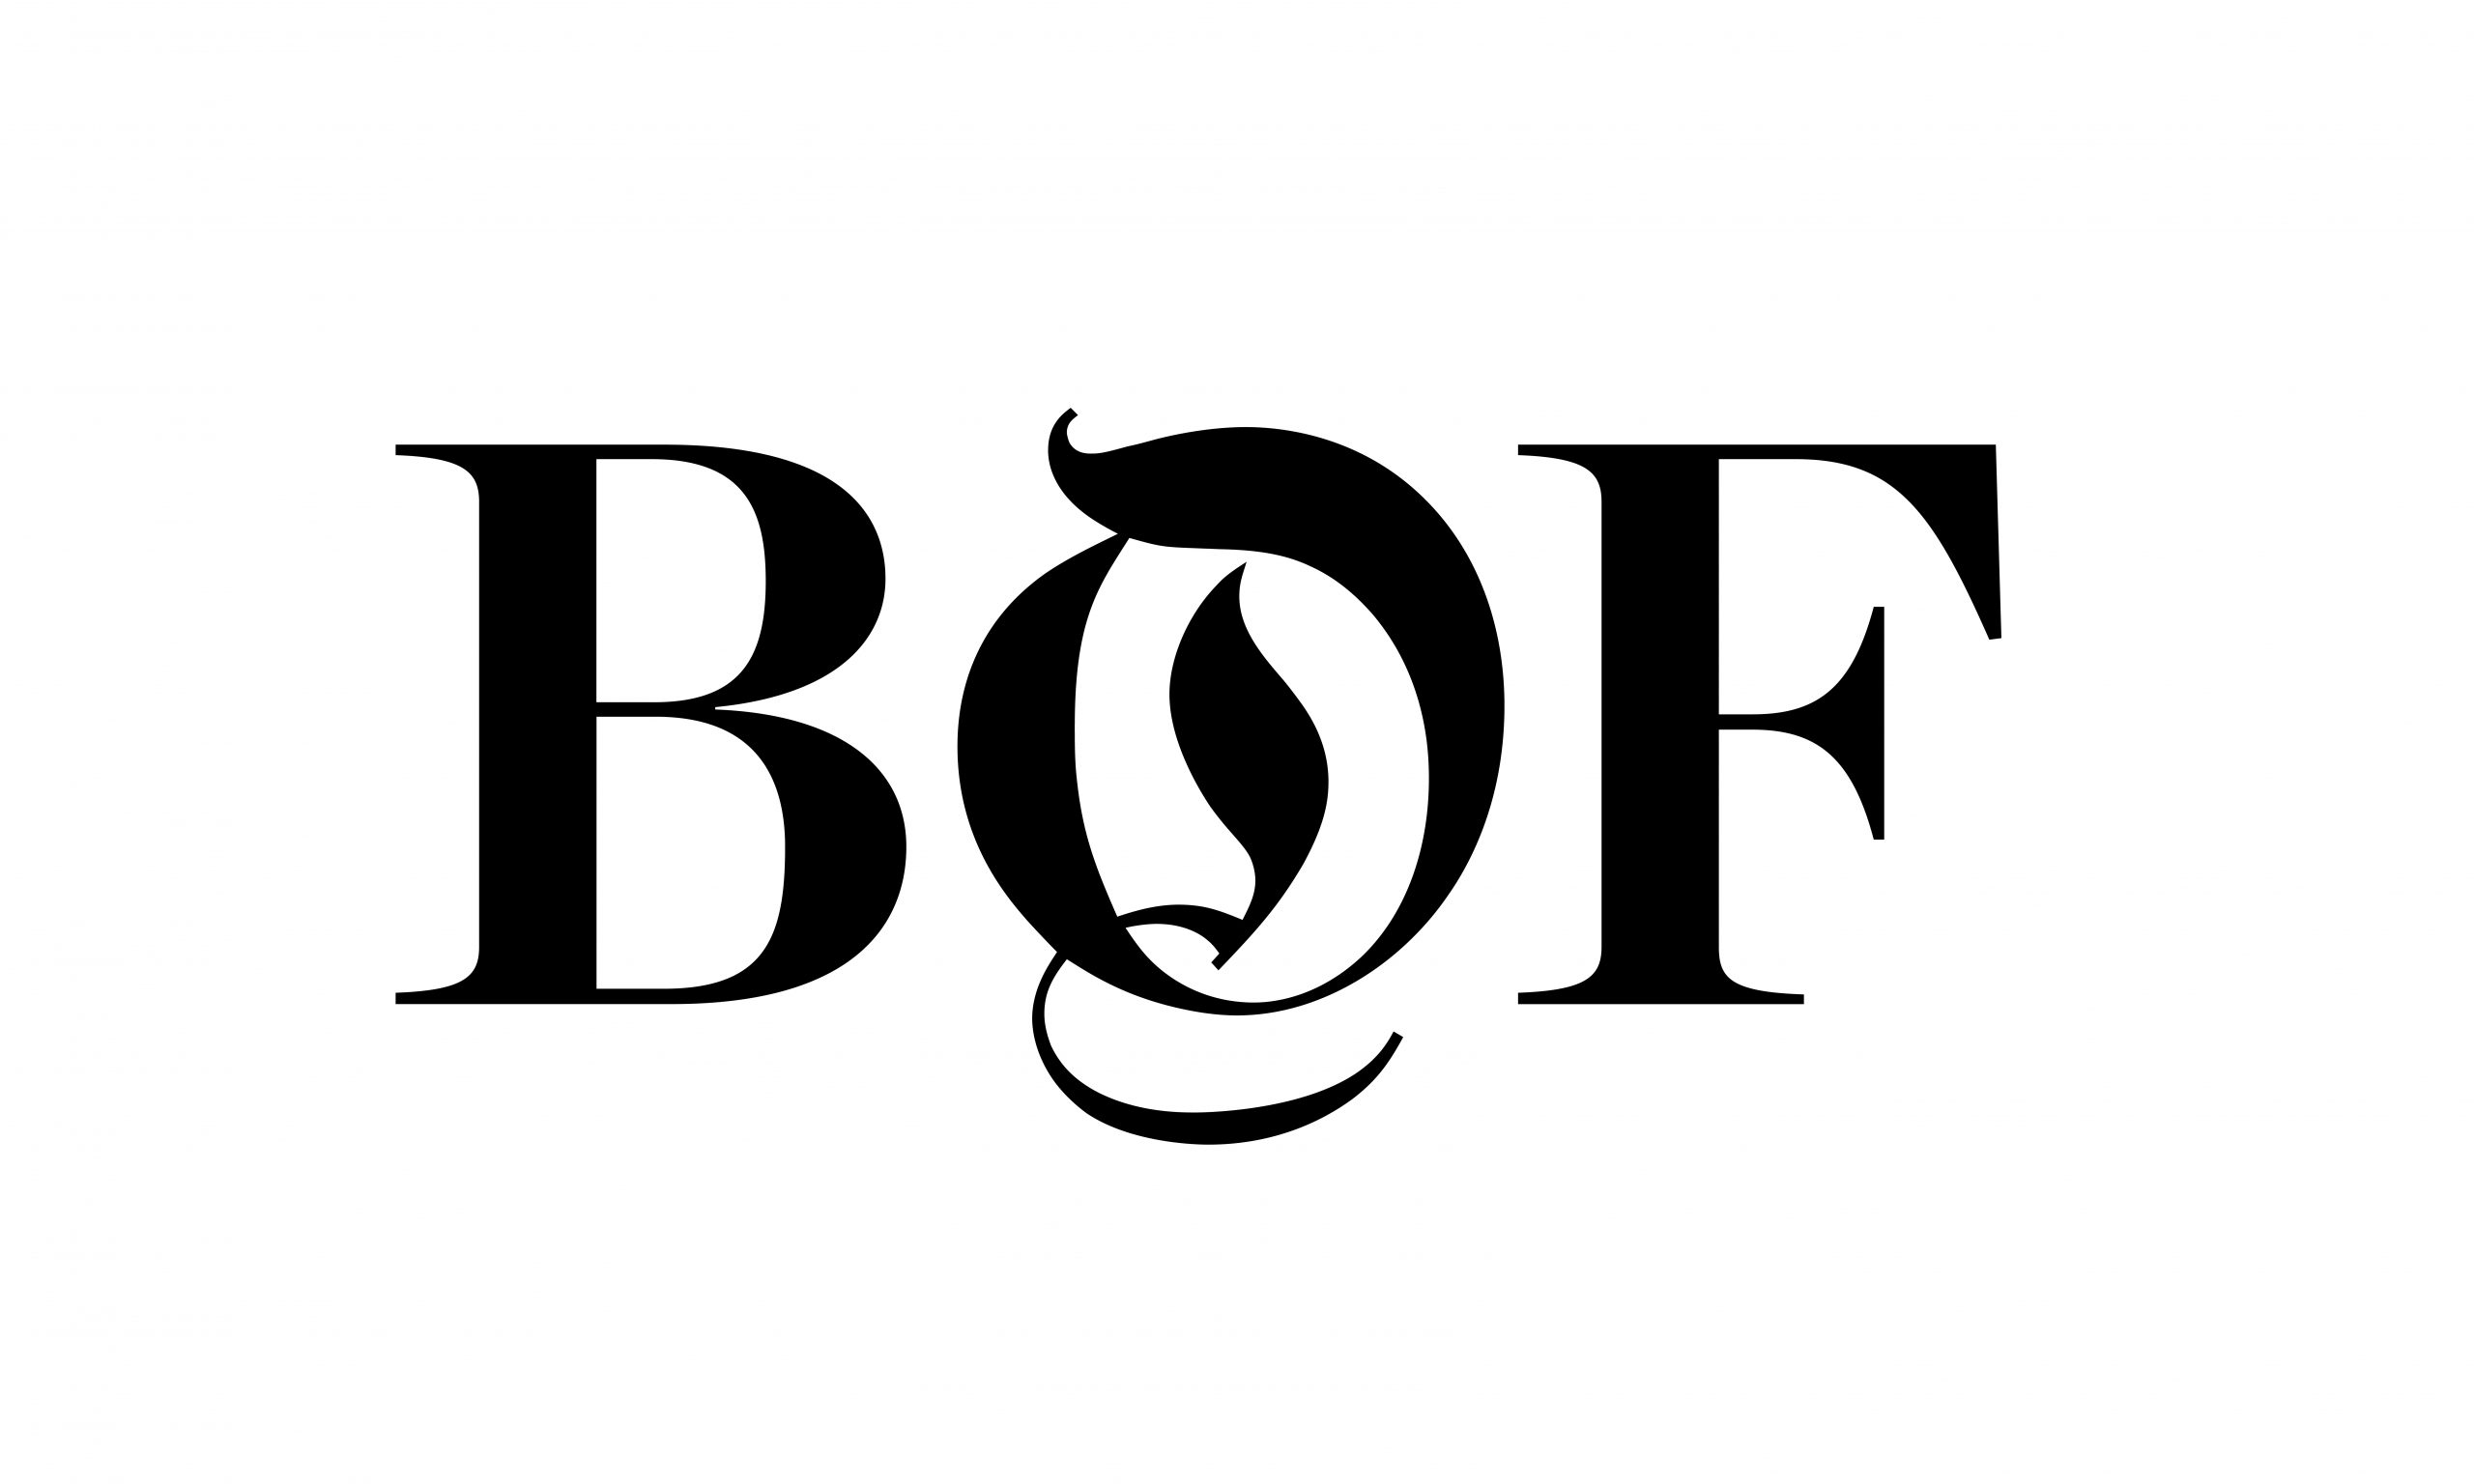 BoF 时装商业评论中国区被全员裁撤